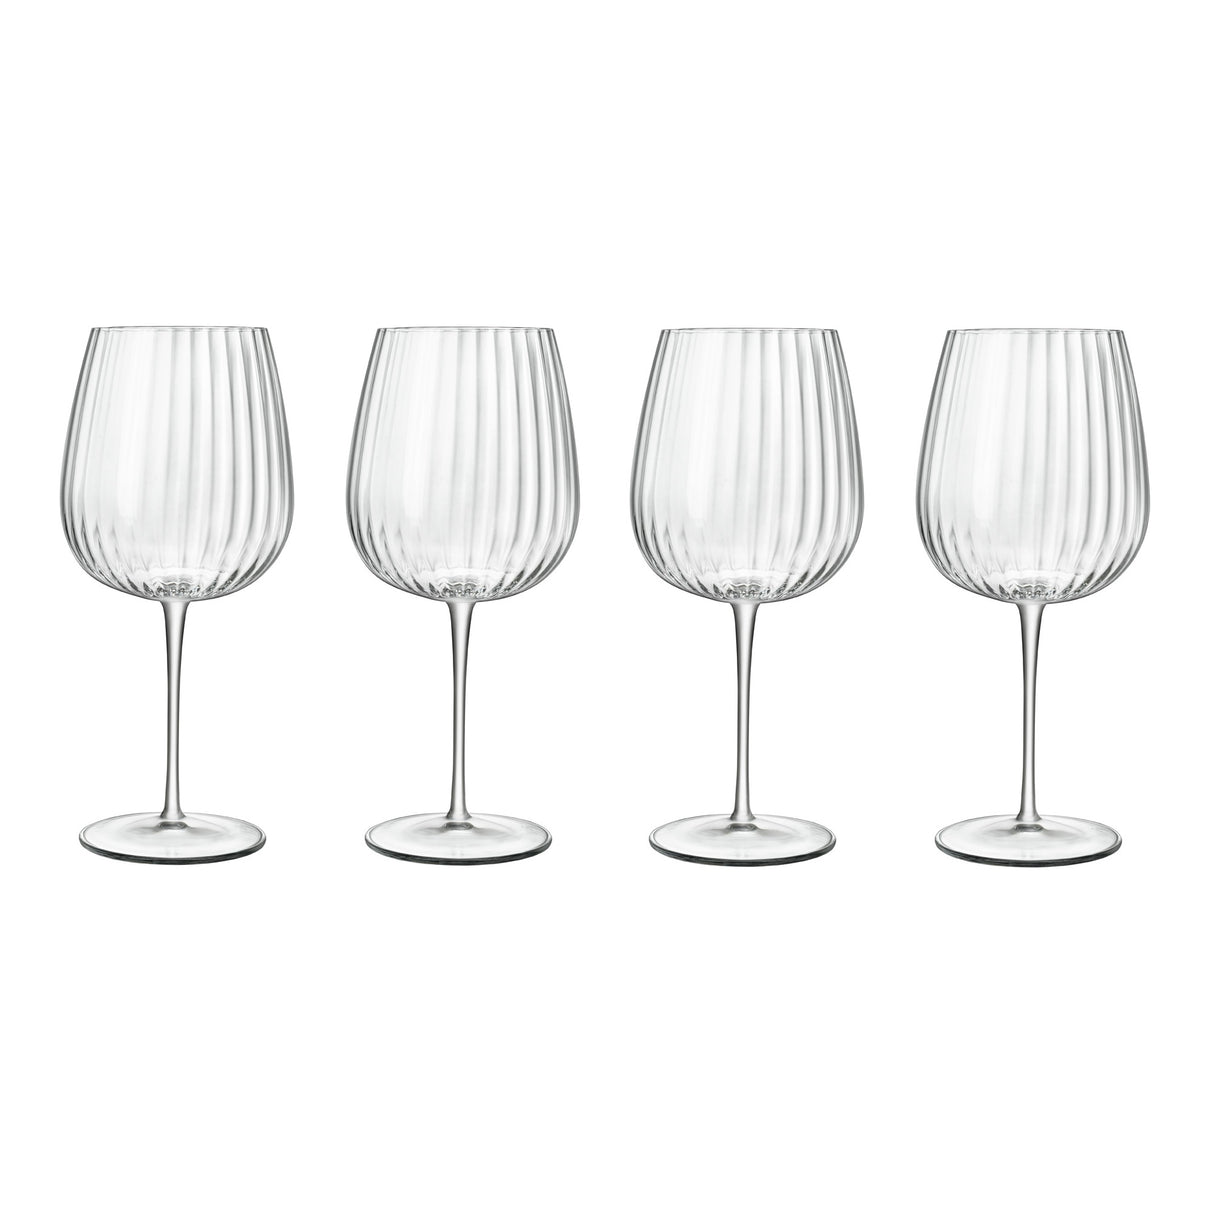 Elegant balloon glasses for burgundy wine or gin cocktails